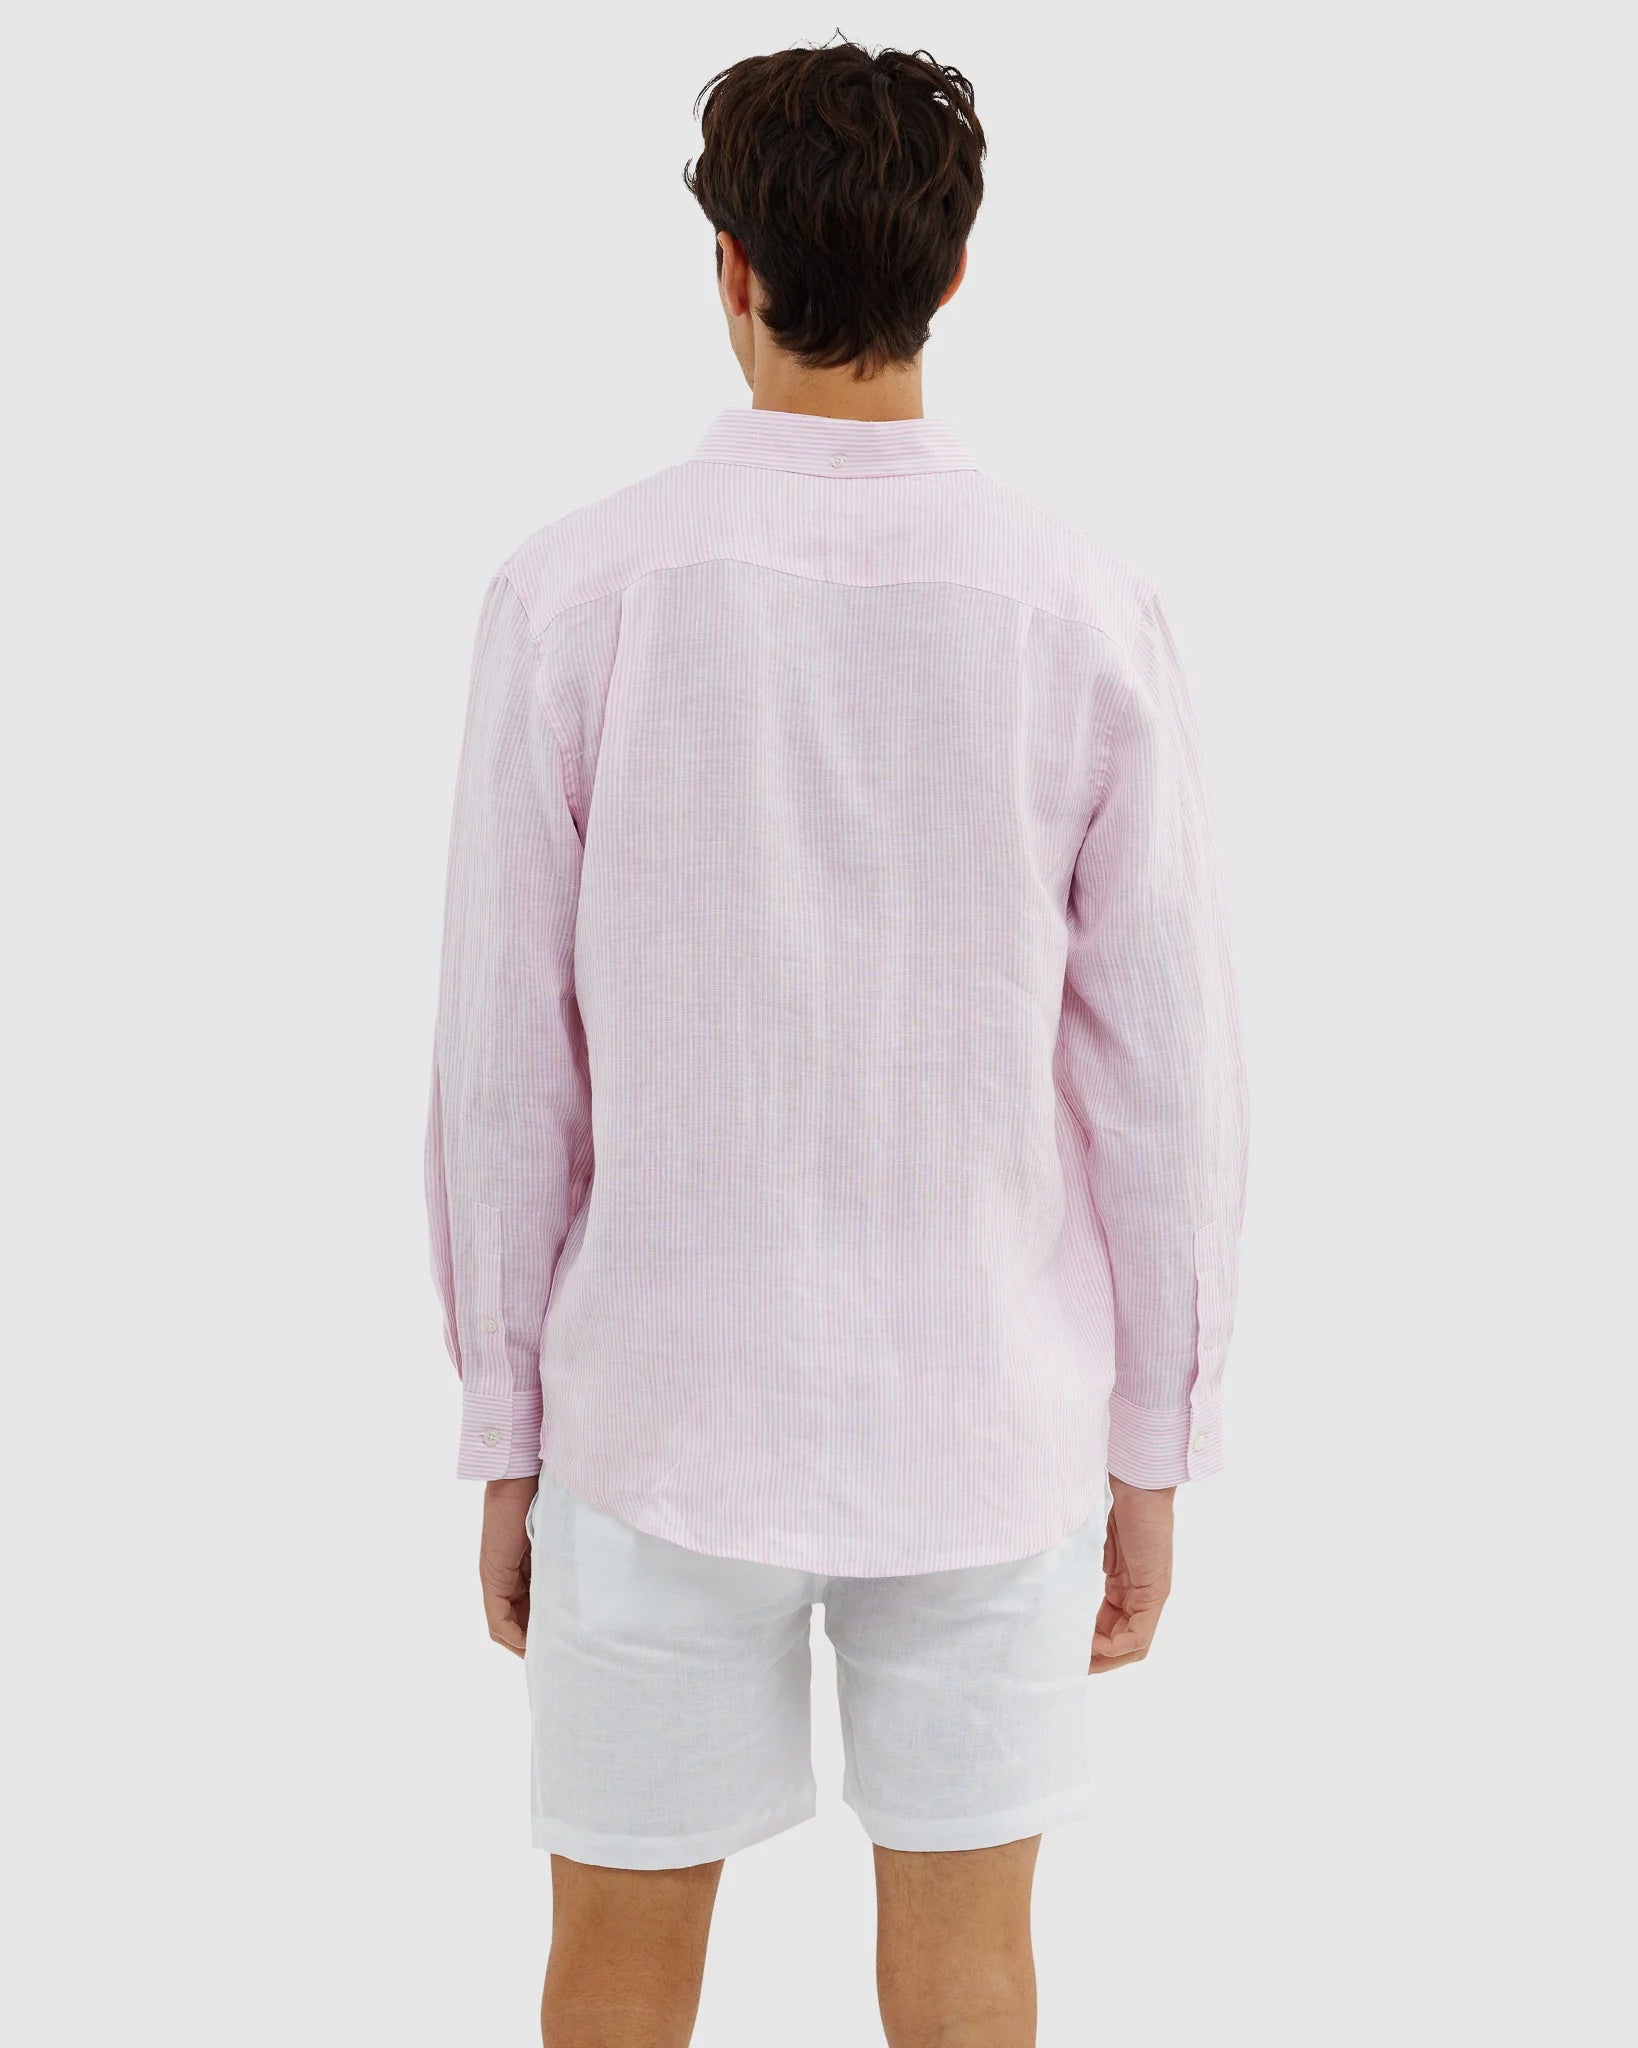 ortc - Linen Shirt